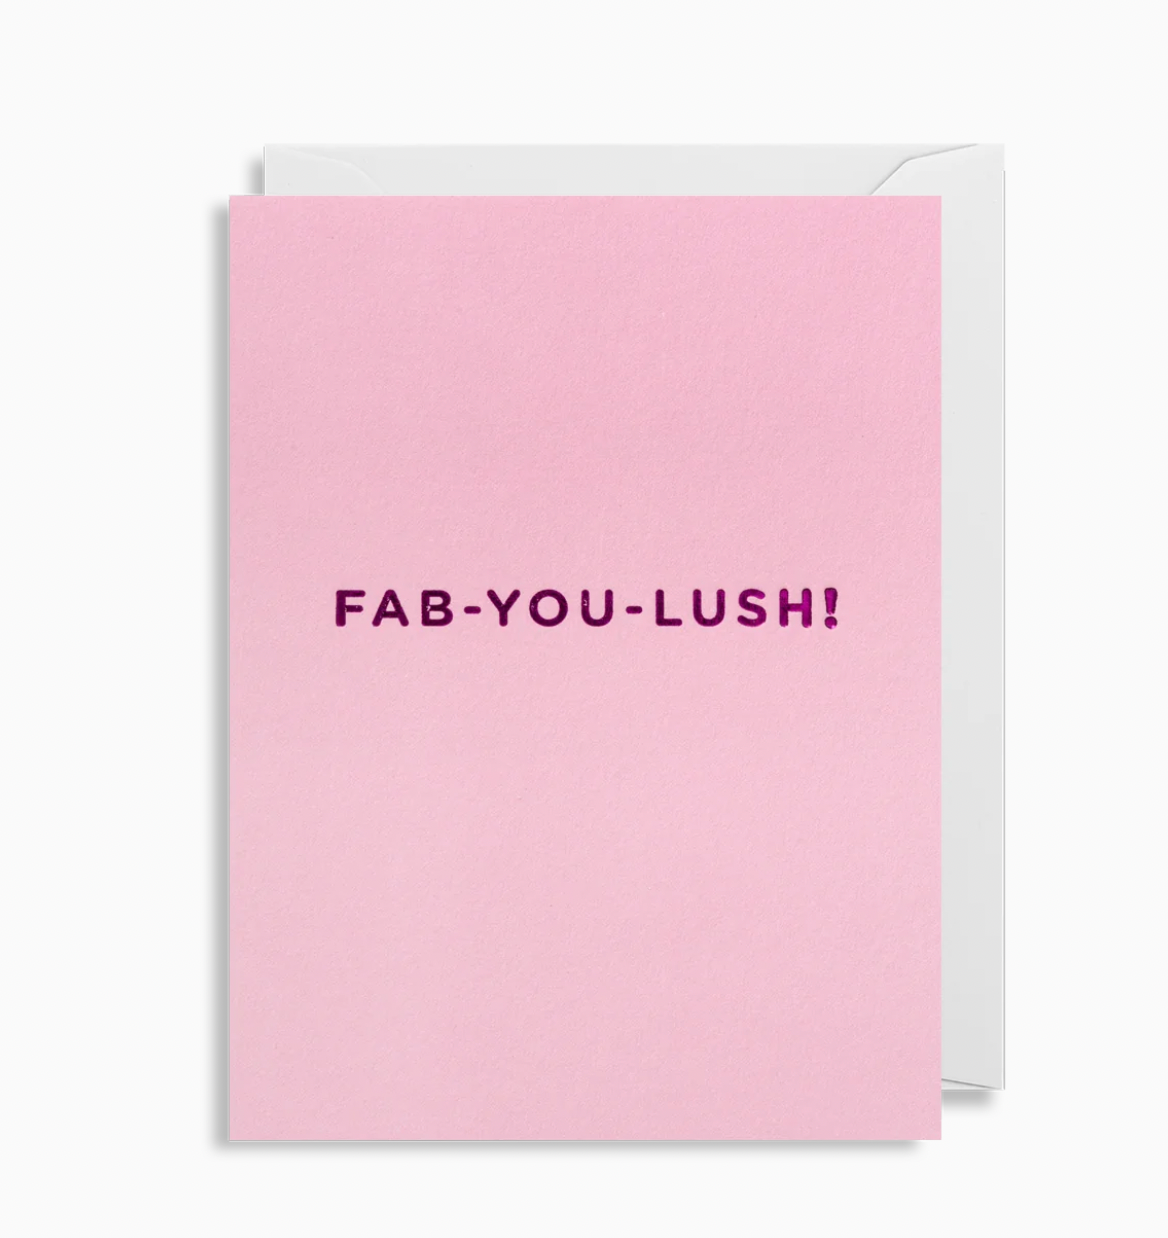 FAB-YOU-LUSH CARD